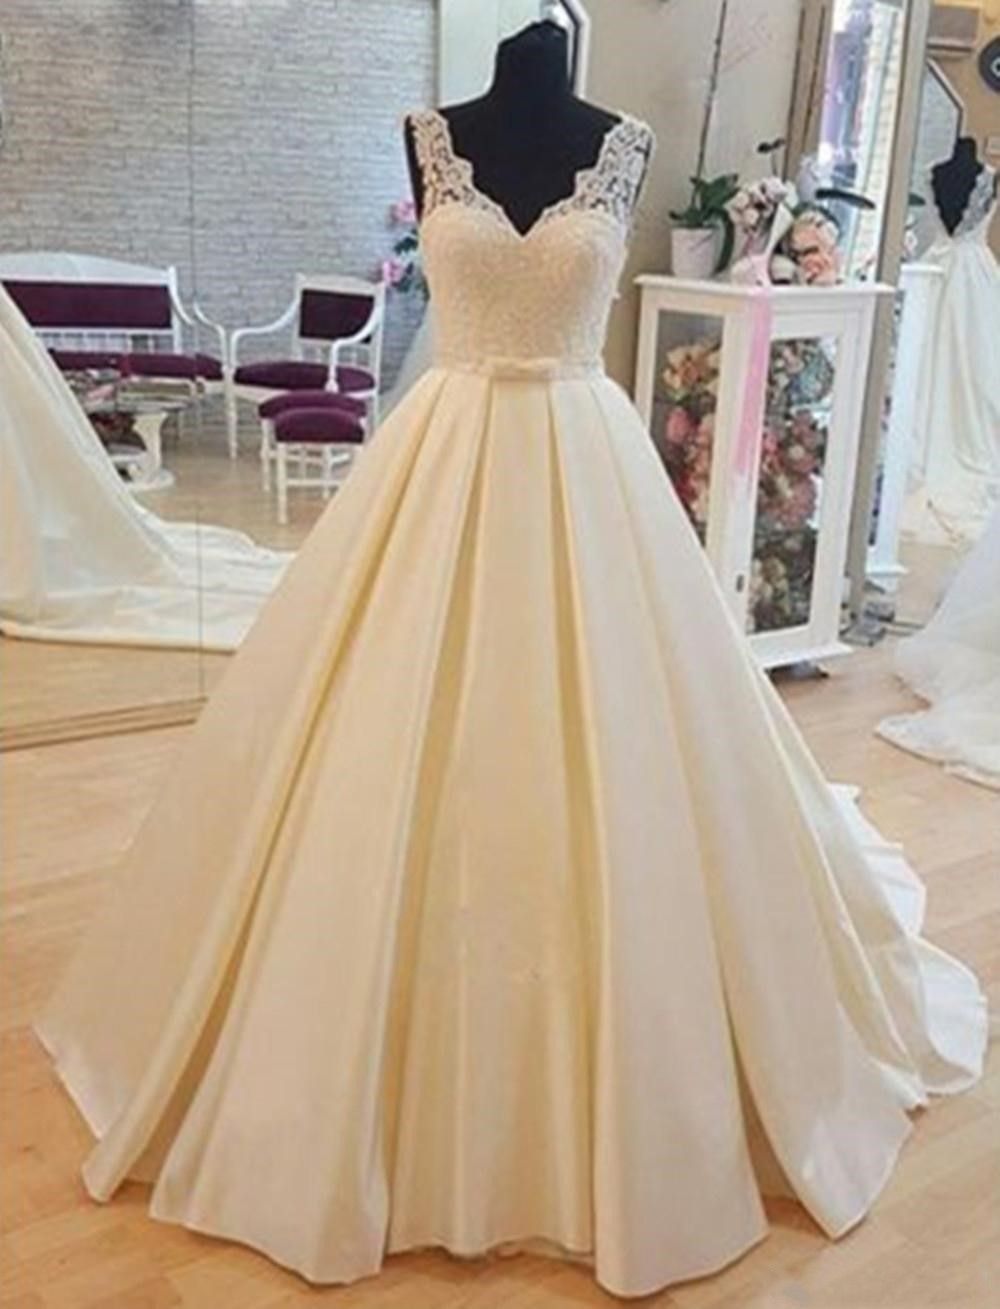 Bridesmaid Dress Color Chart